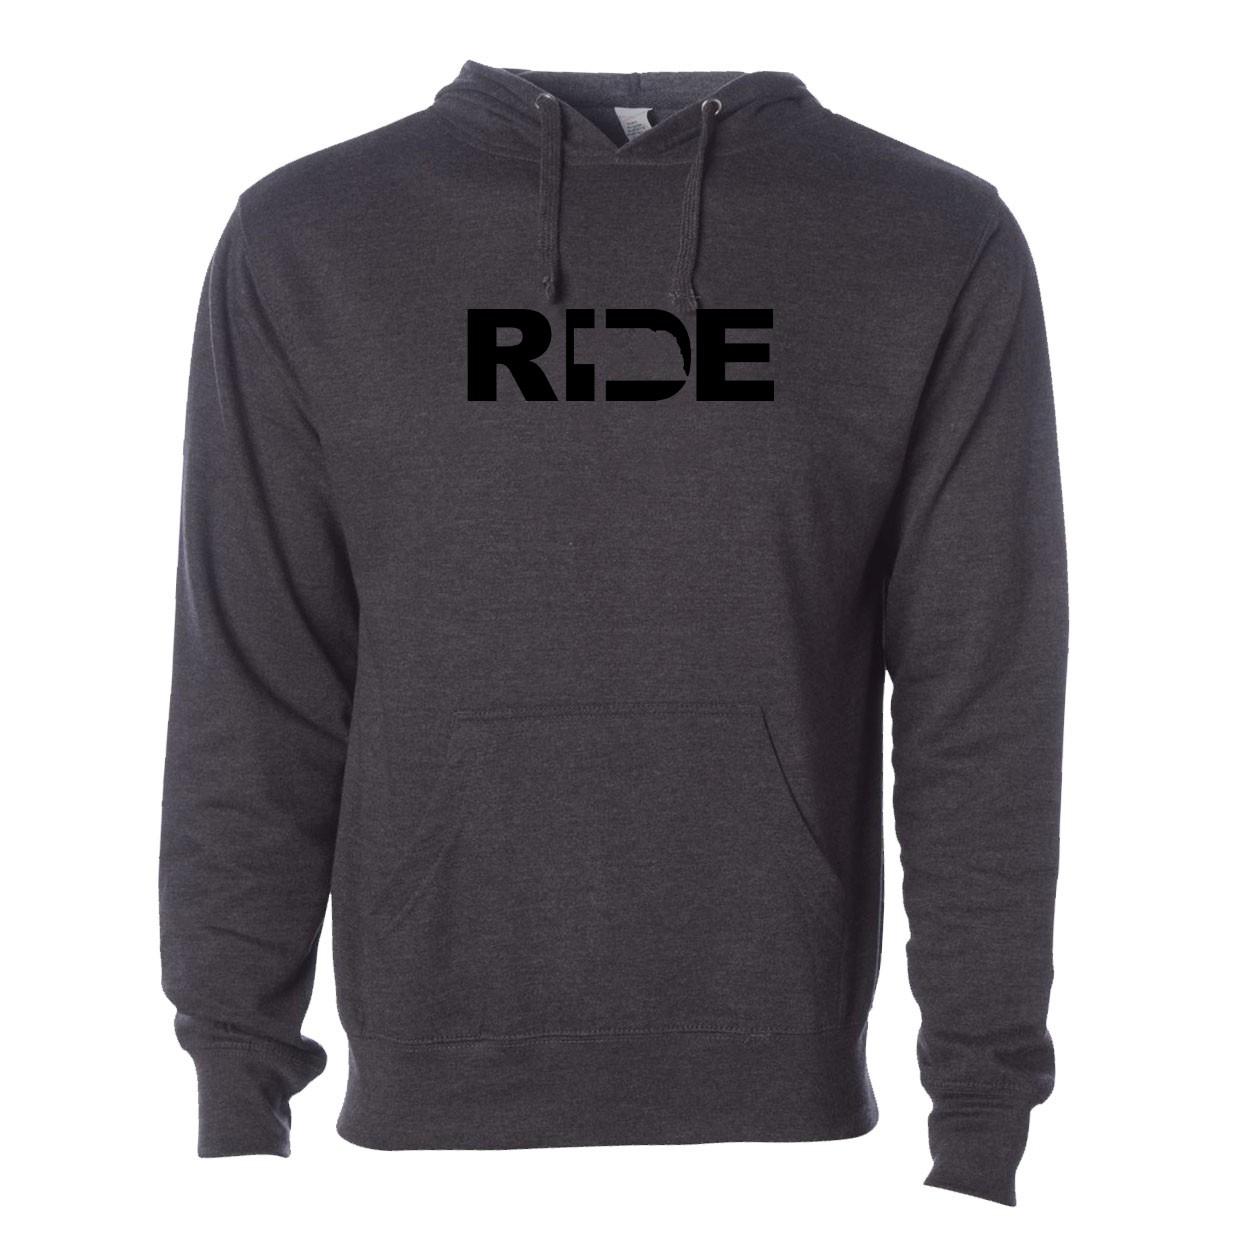 Ride Nebraska Classic Sweatshirt Dark Heather Gray (Black Logo)